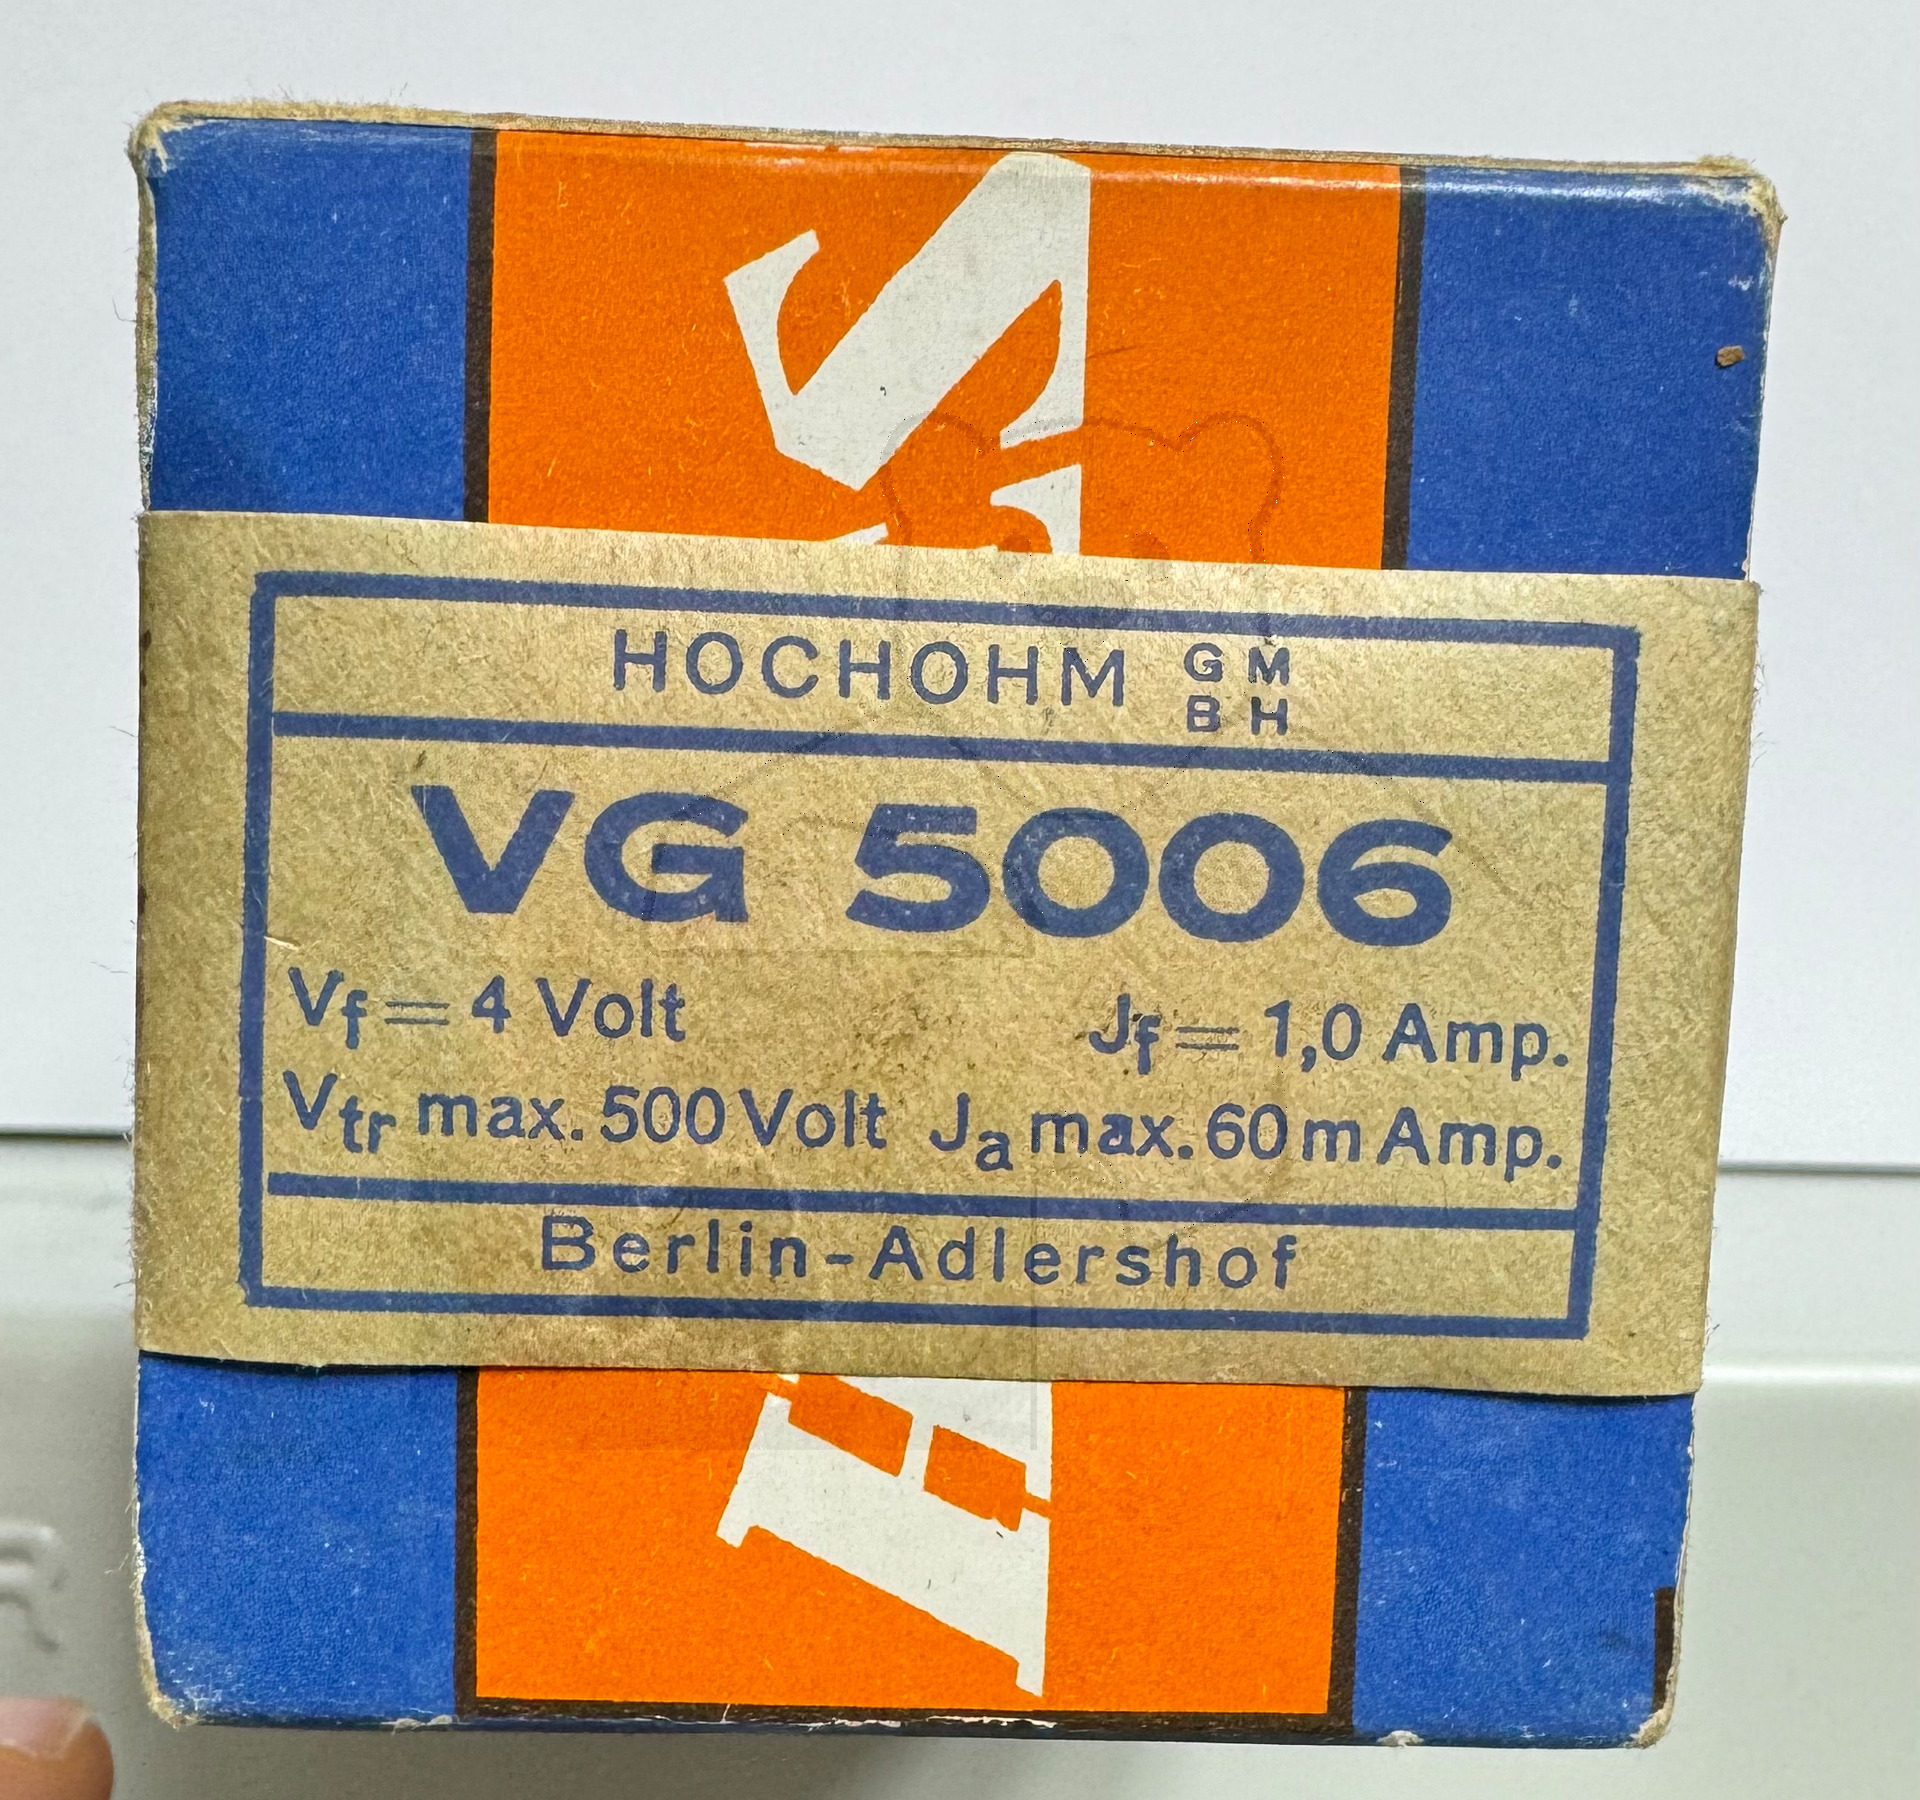 Röhre VG5006 #6403 Verpackung Bild 2